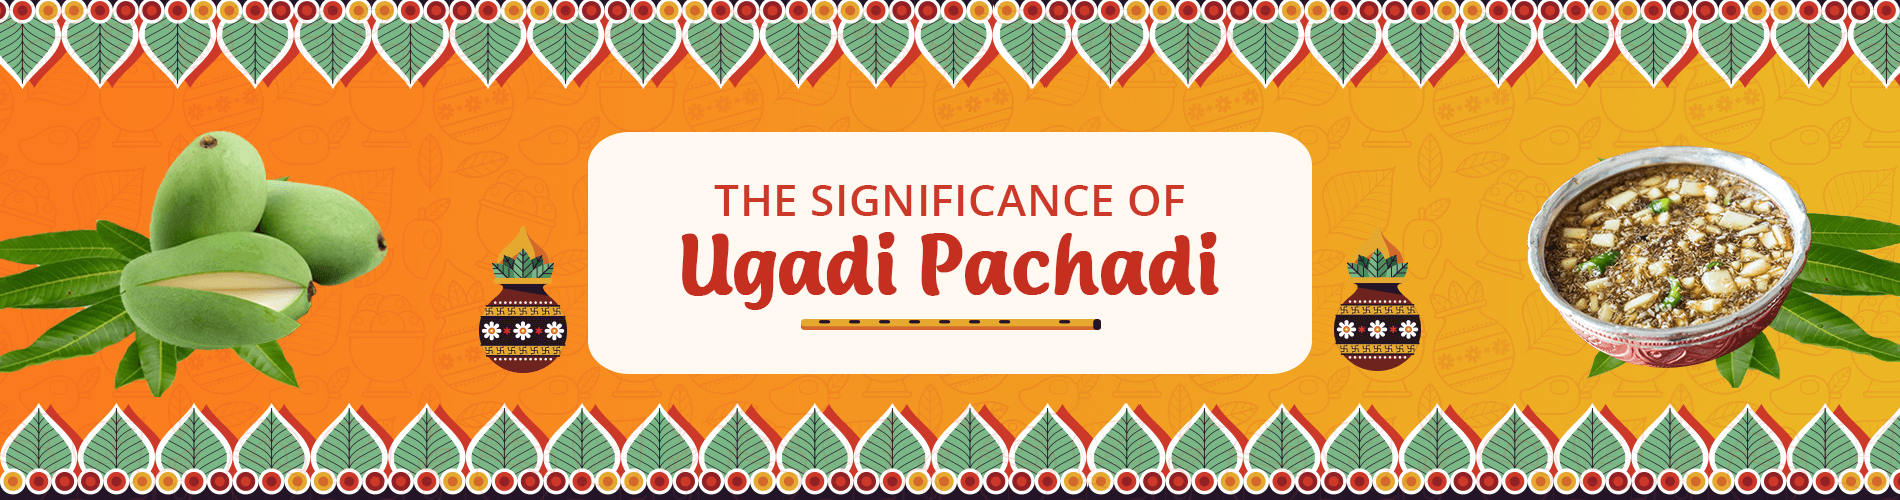 Ugadi Pachadi: The essence of the festival